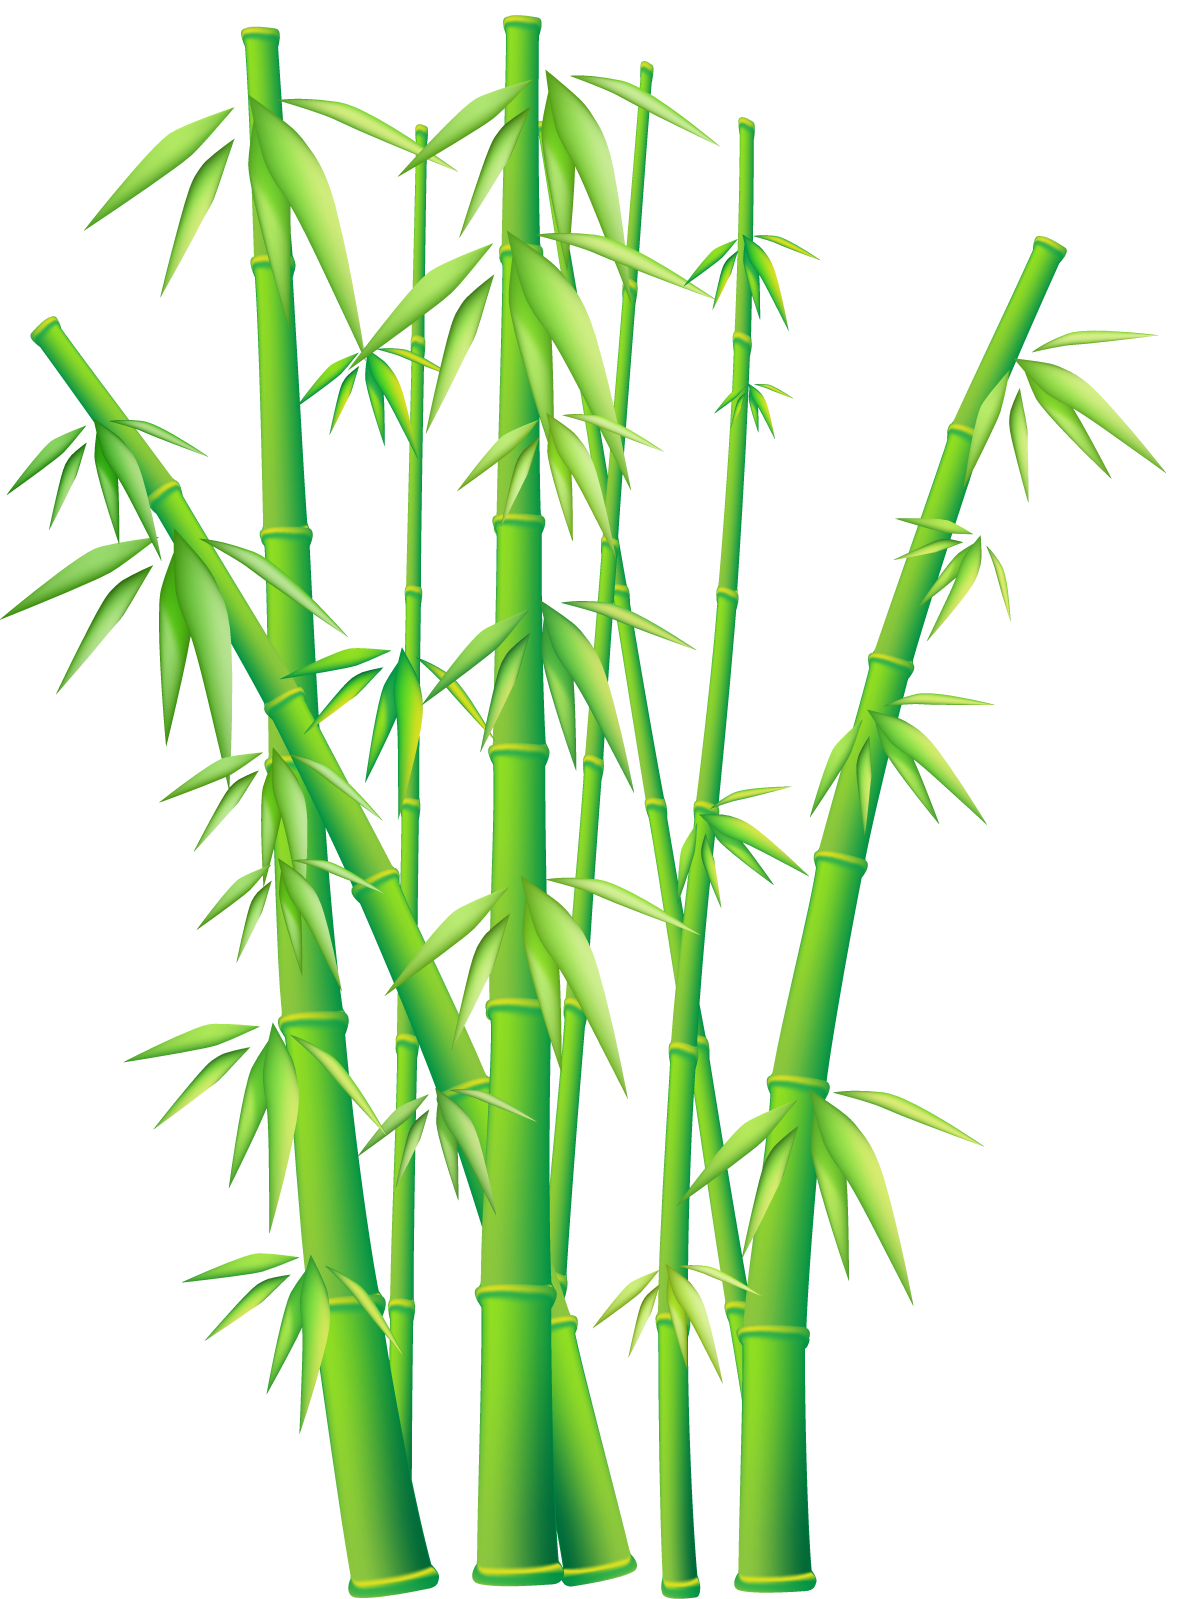 Bamboo #1